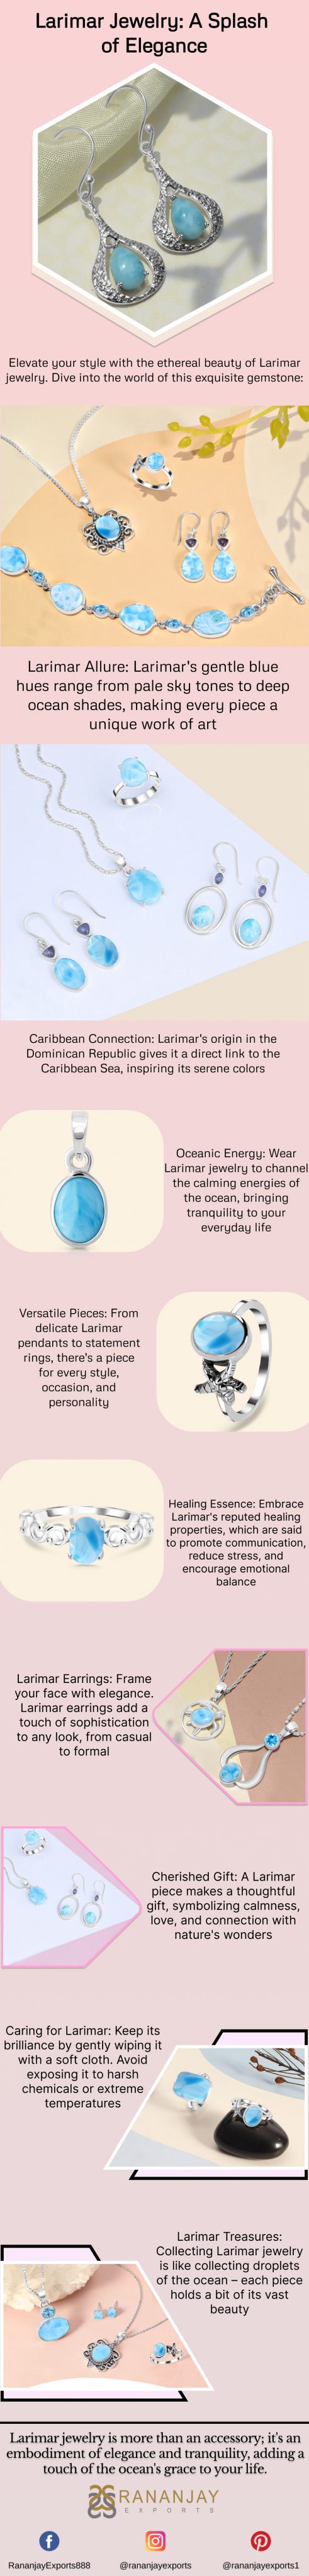 Larimar Jewelry: A Splash of Elegance